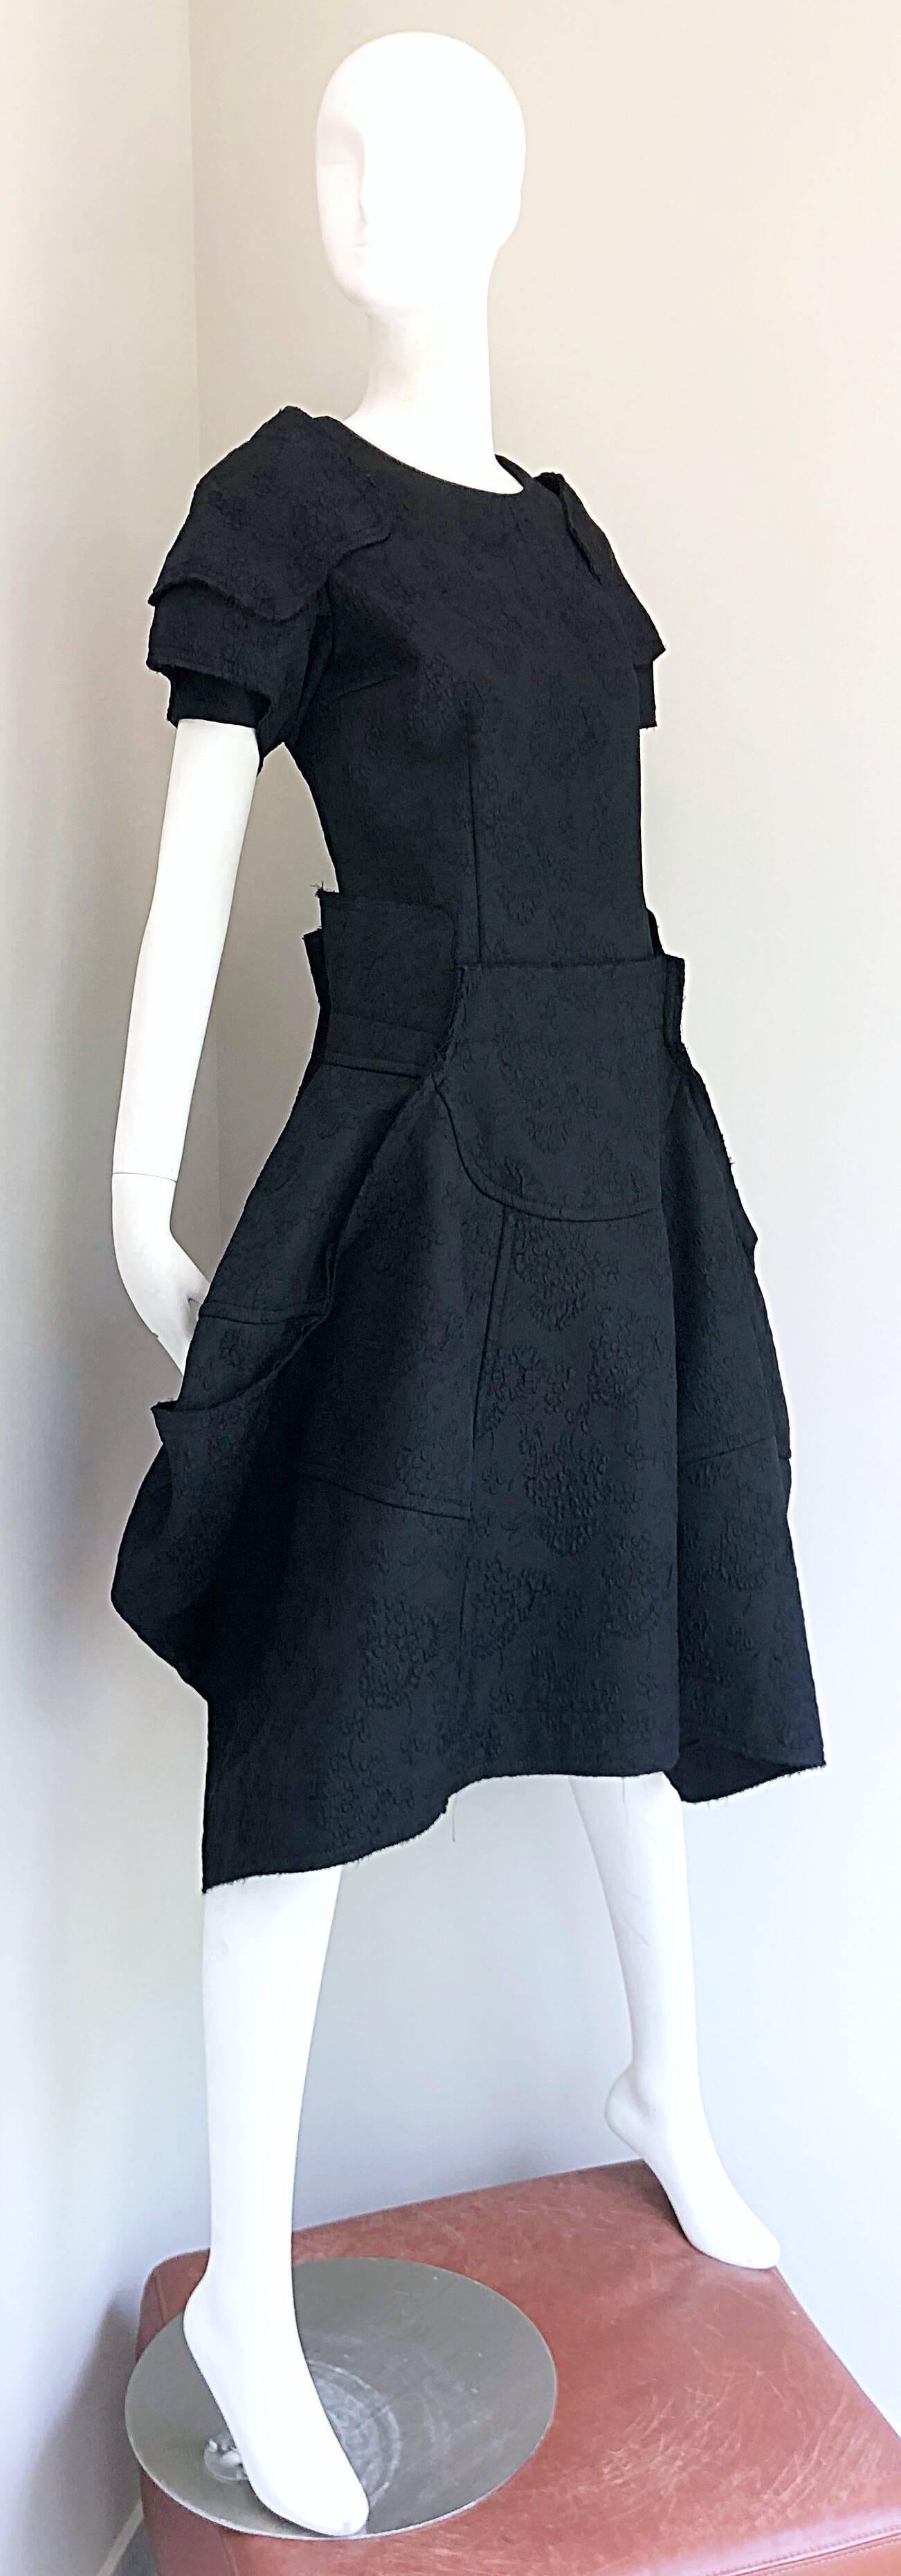 Comme Des Garcons Samurai 2016 Collection Black Avant Garde Collectible Dress 11